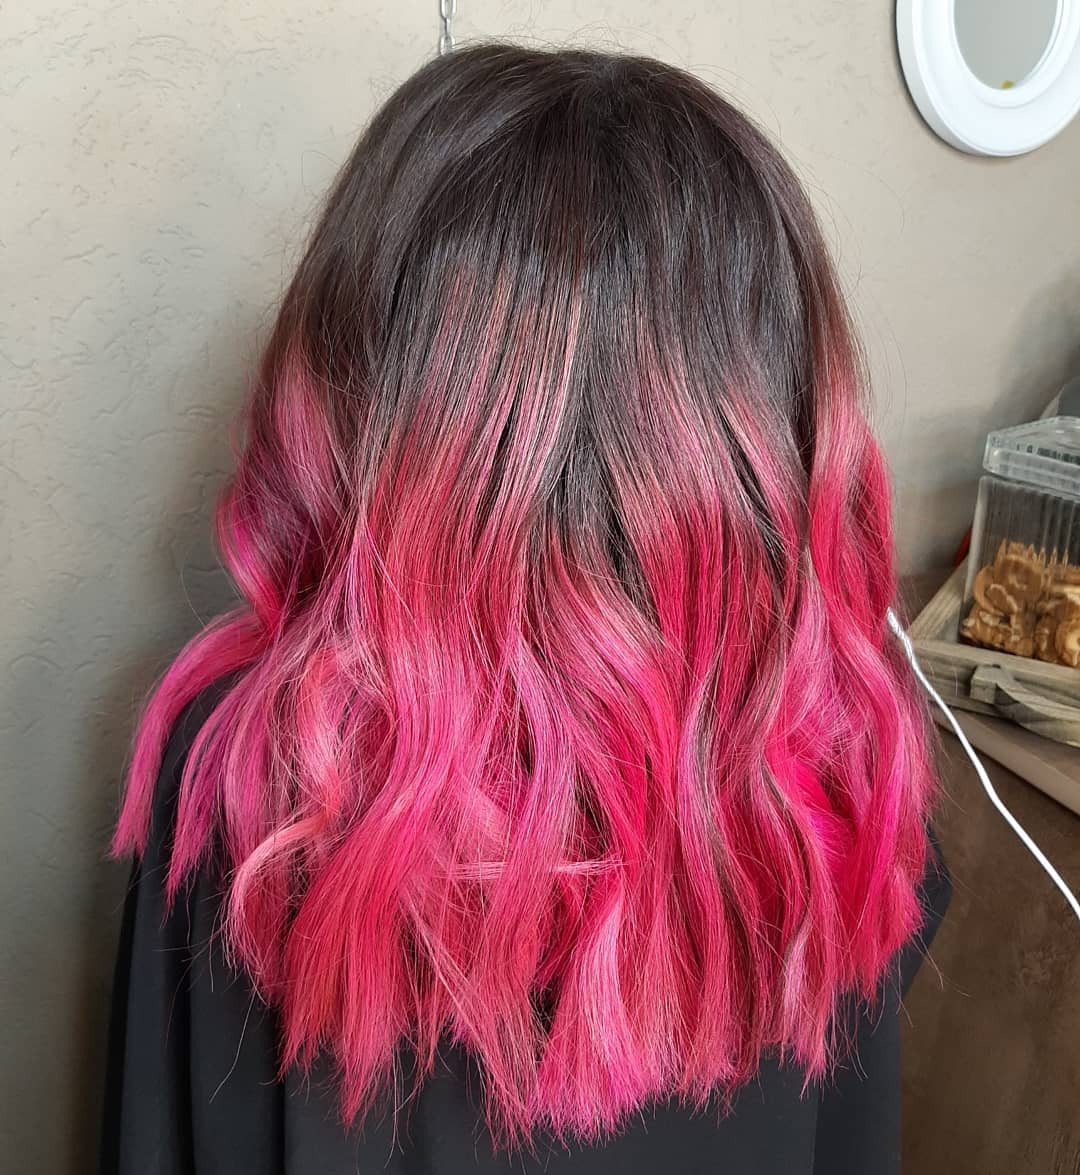 121040421 168084501648681 2445990372251501189 n - Ombré hair rosa: 60 inspirações, trends